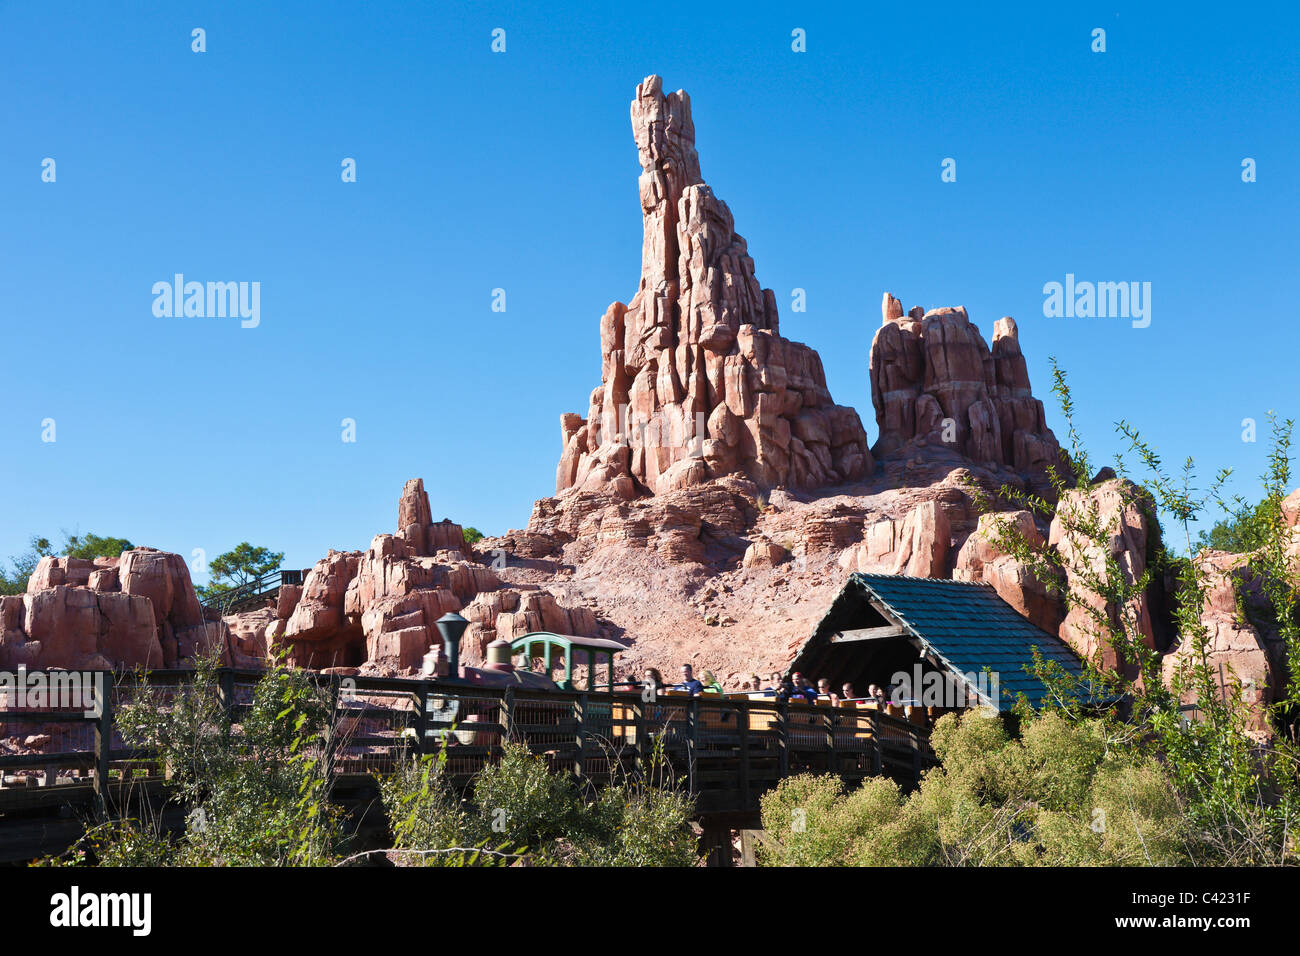 Big Thunder Mountain Railroad roller coaster ride at the Magic Kingdom in Disney World, Kissimmee, Florida Stock Photo